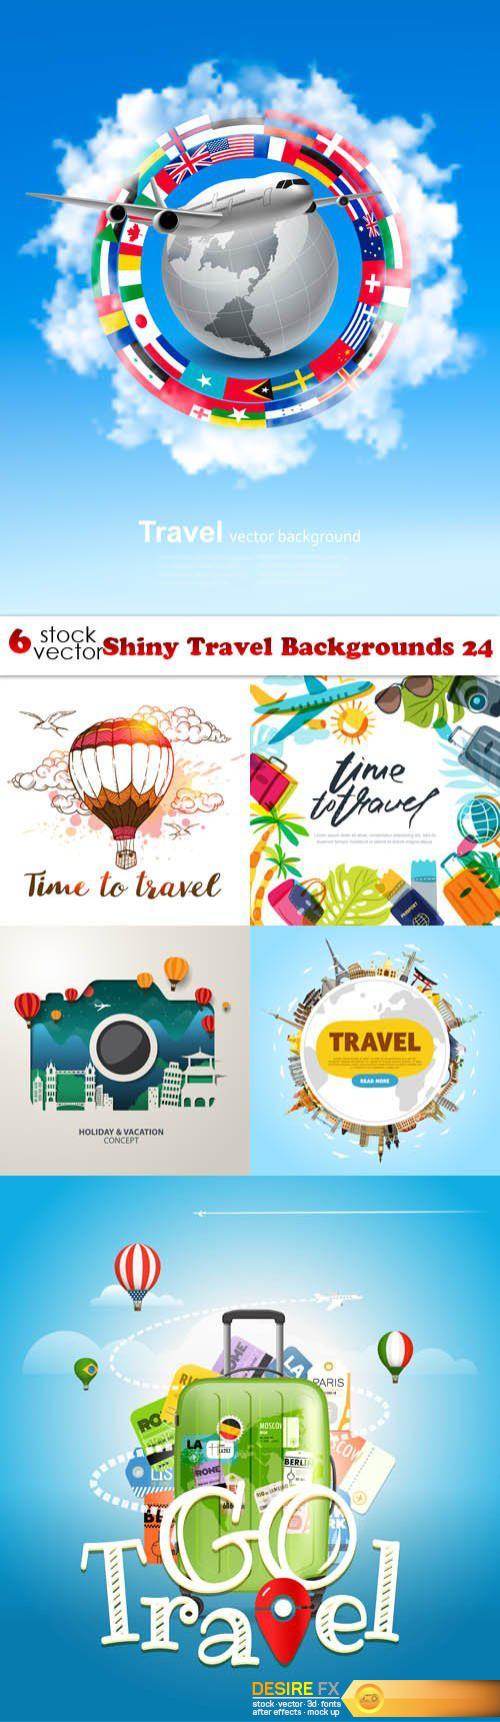 Vectors - Shiny Travel Backgrounds 24